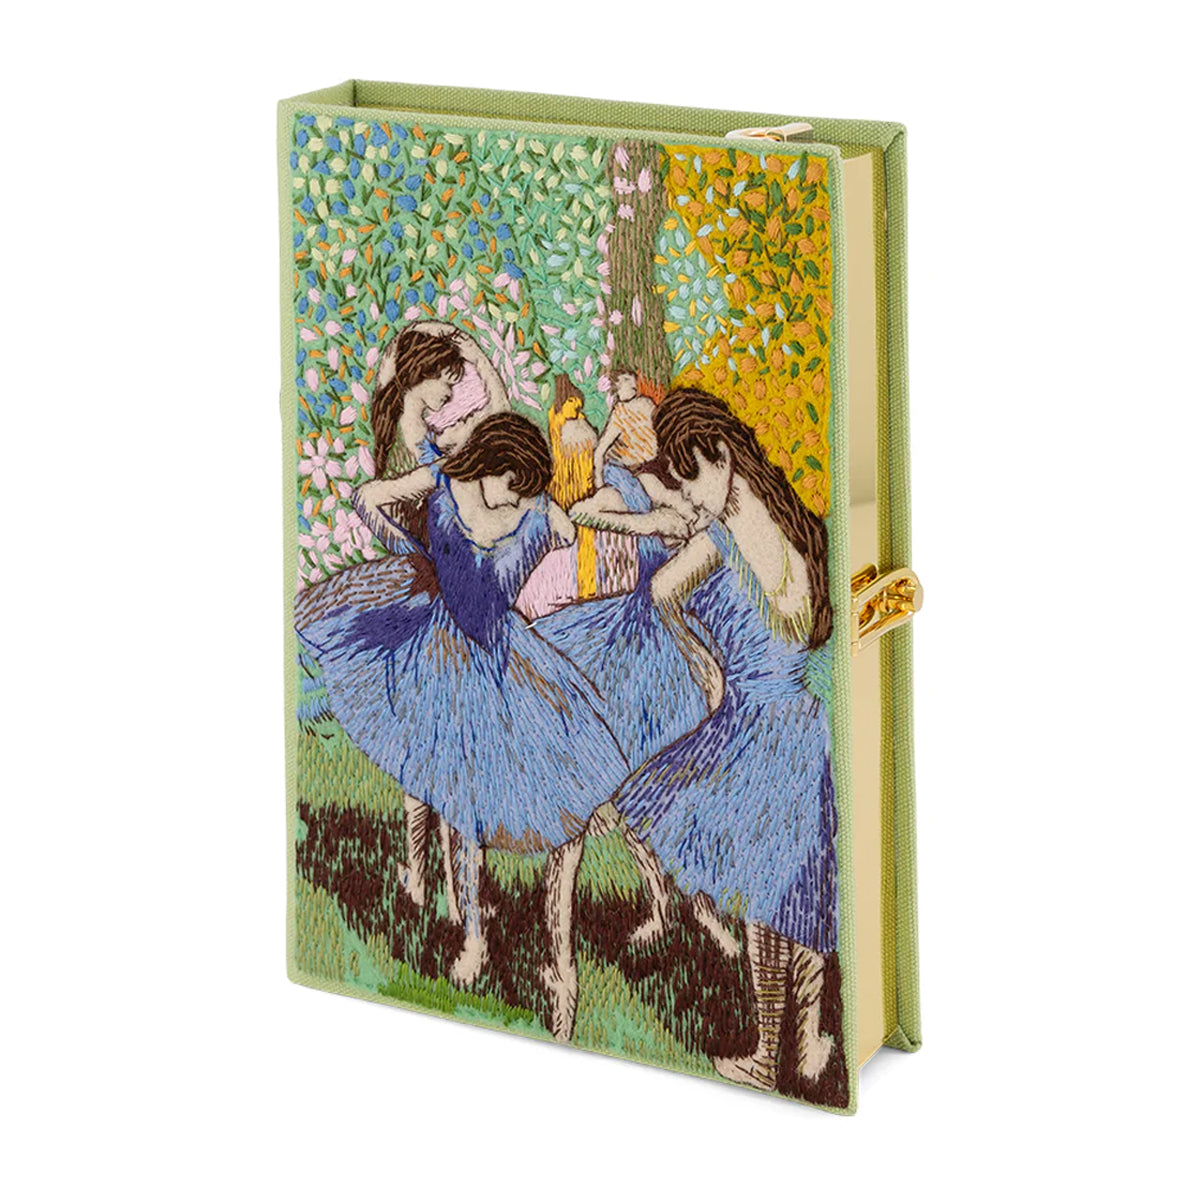 Degas "Blue Ballerinas" Book Clutch with Strap